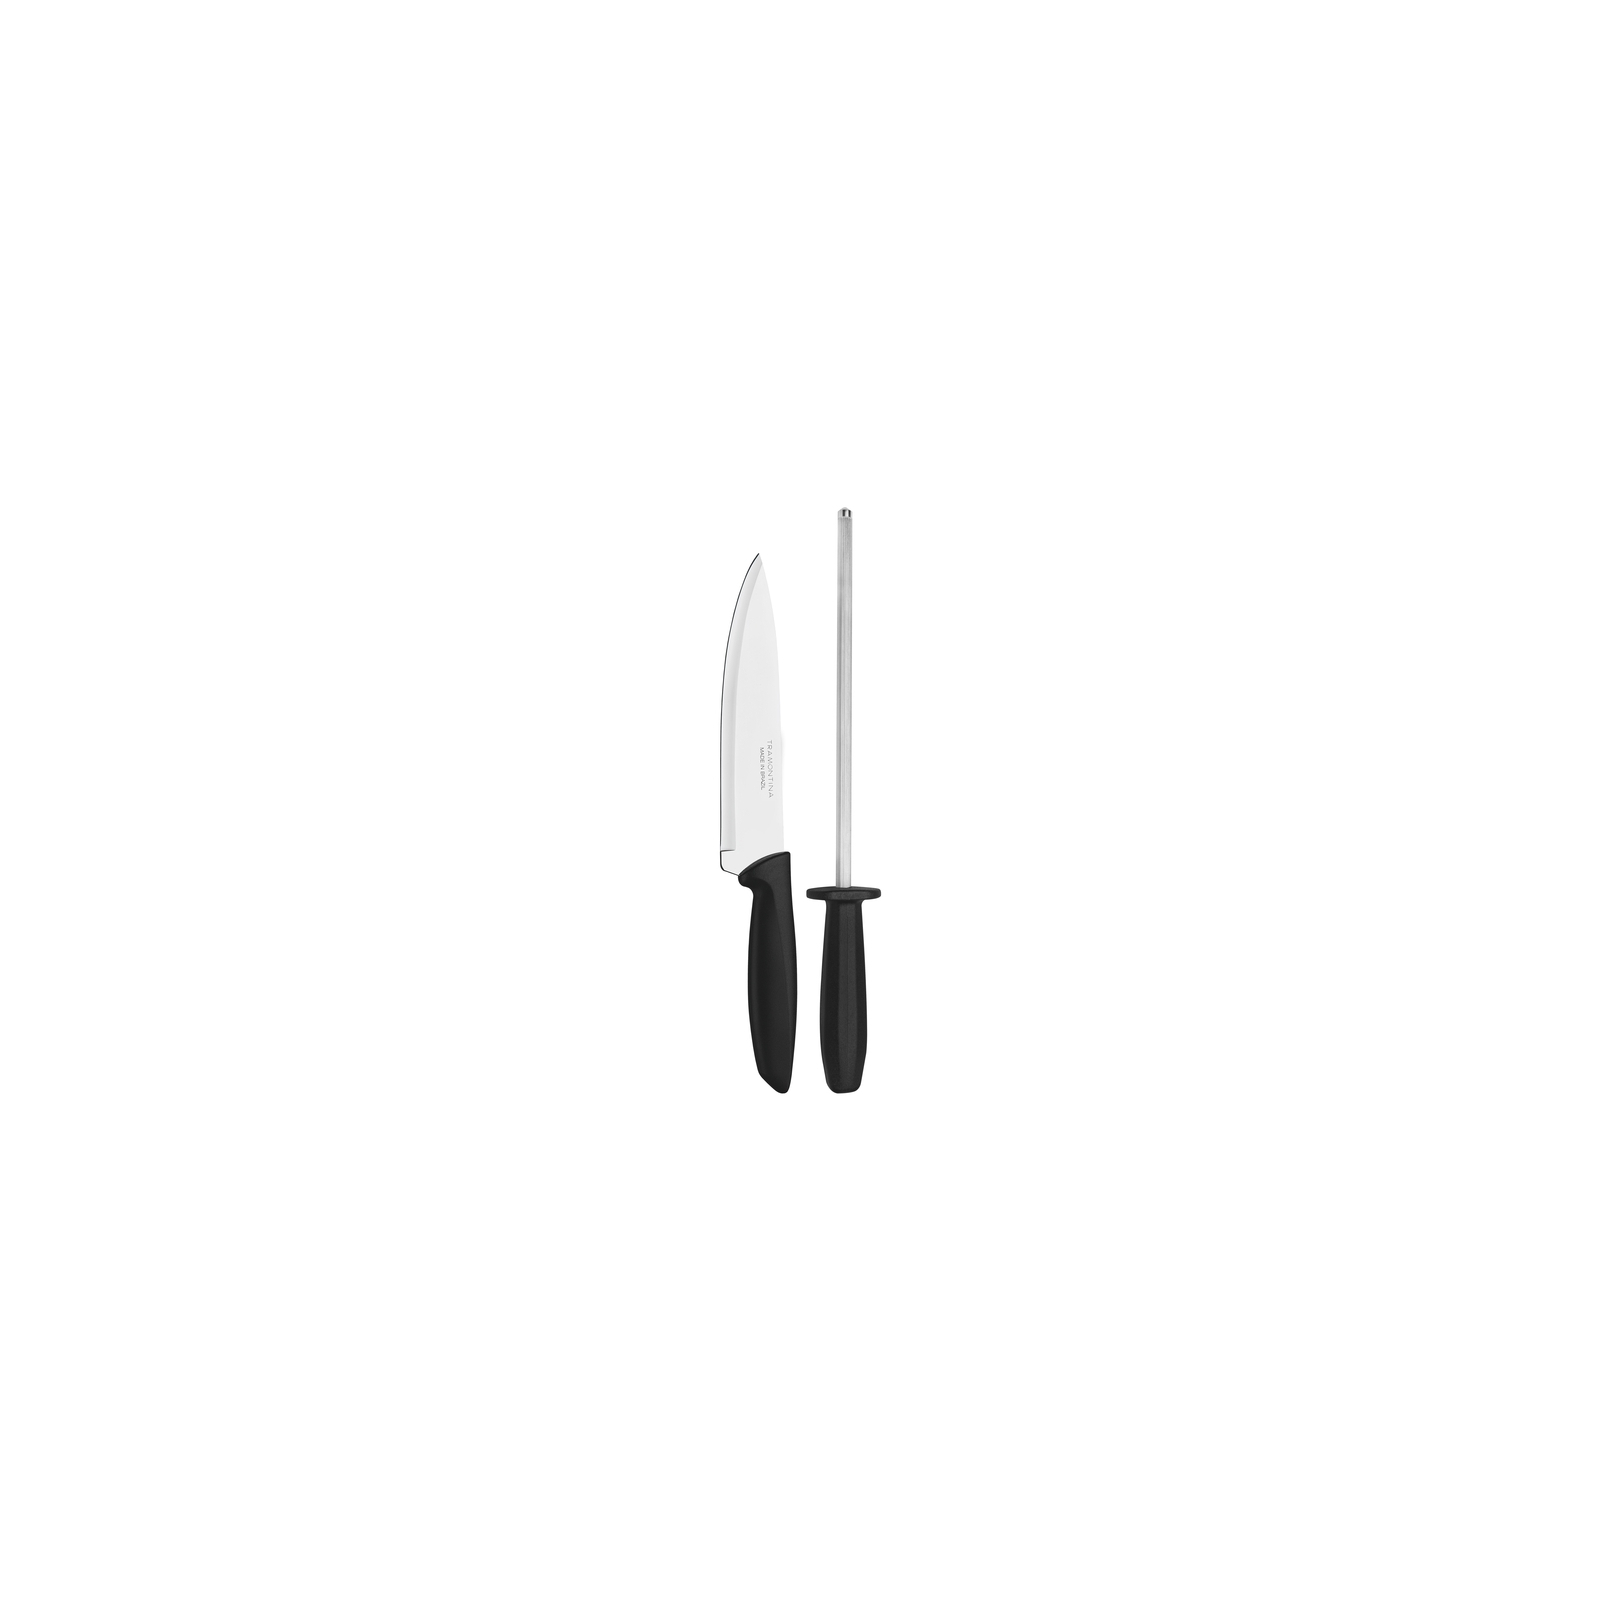 Набор ножей Tramontina Plenus 2 предмета (нож 178мм + мусат) Black (23498/011) изображение 2